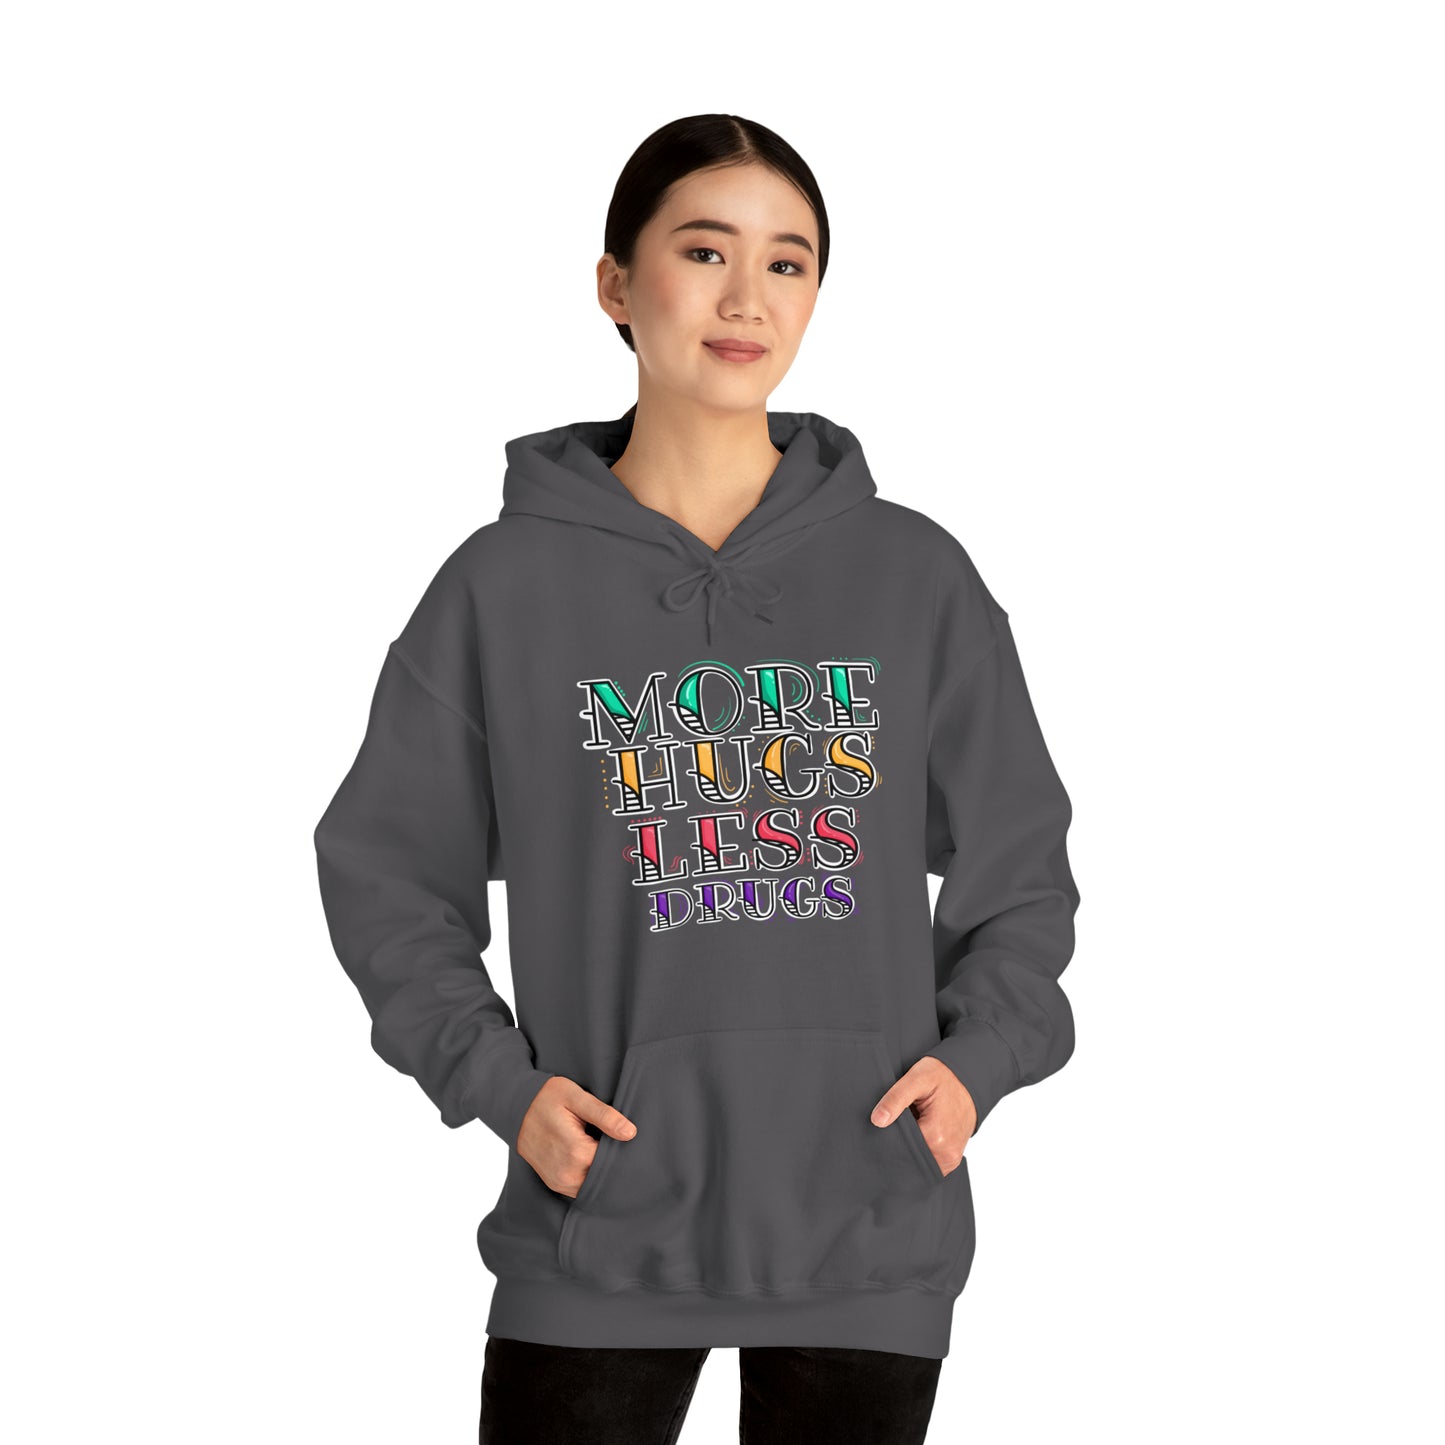 More hugs less drugs Unisex Heavy Blend™ Hooded Sweatshirt